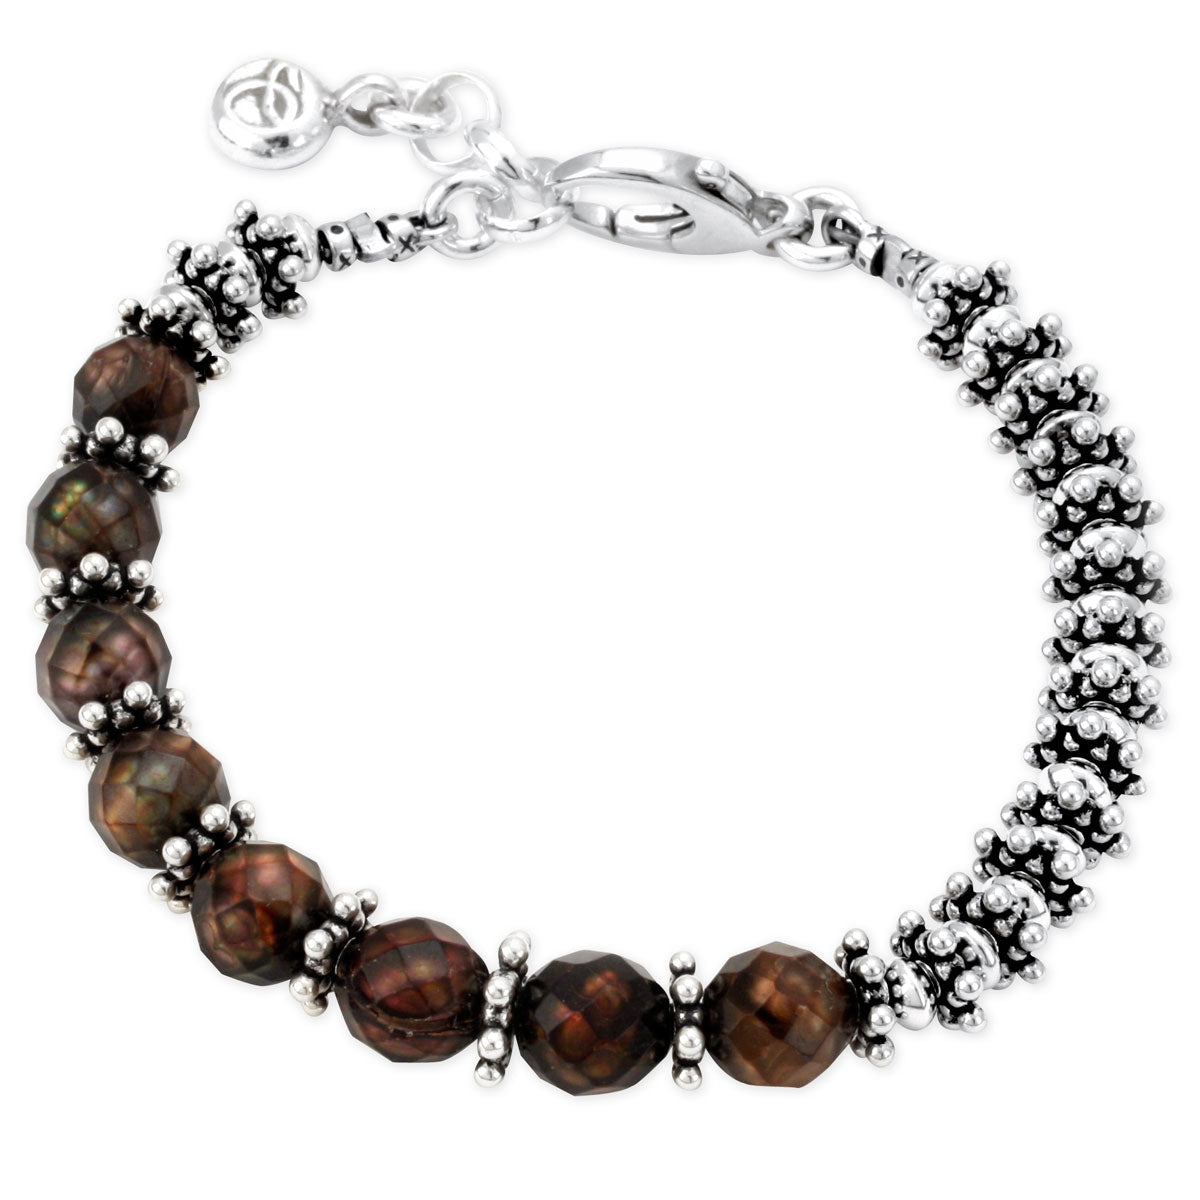 Asymmetrical Chocolate Pearl Bracelet-341947